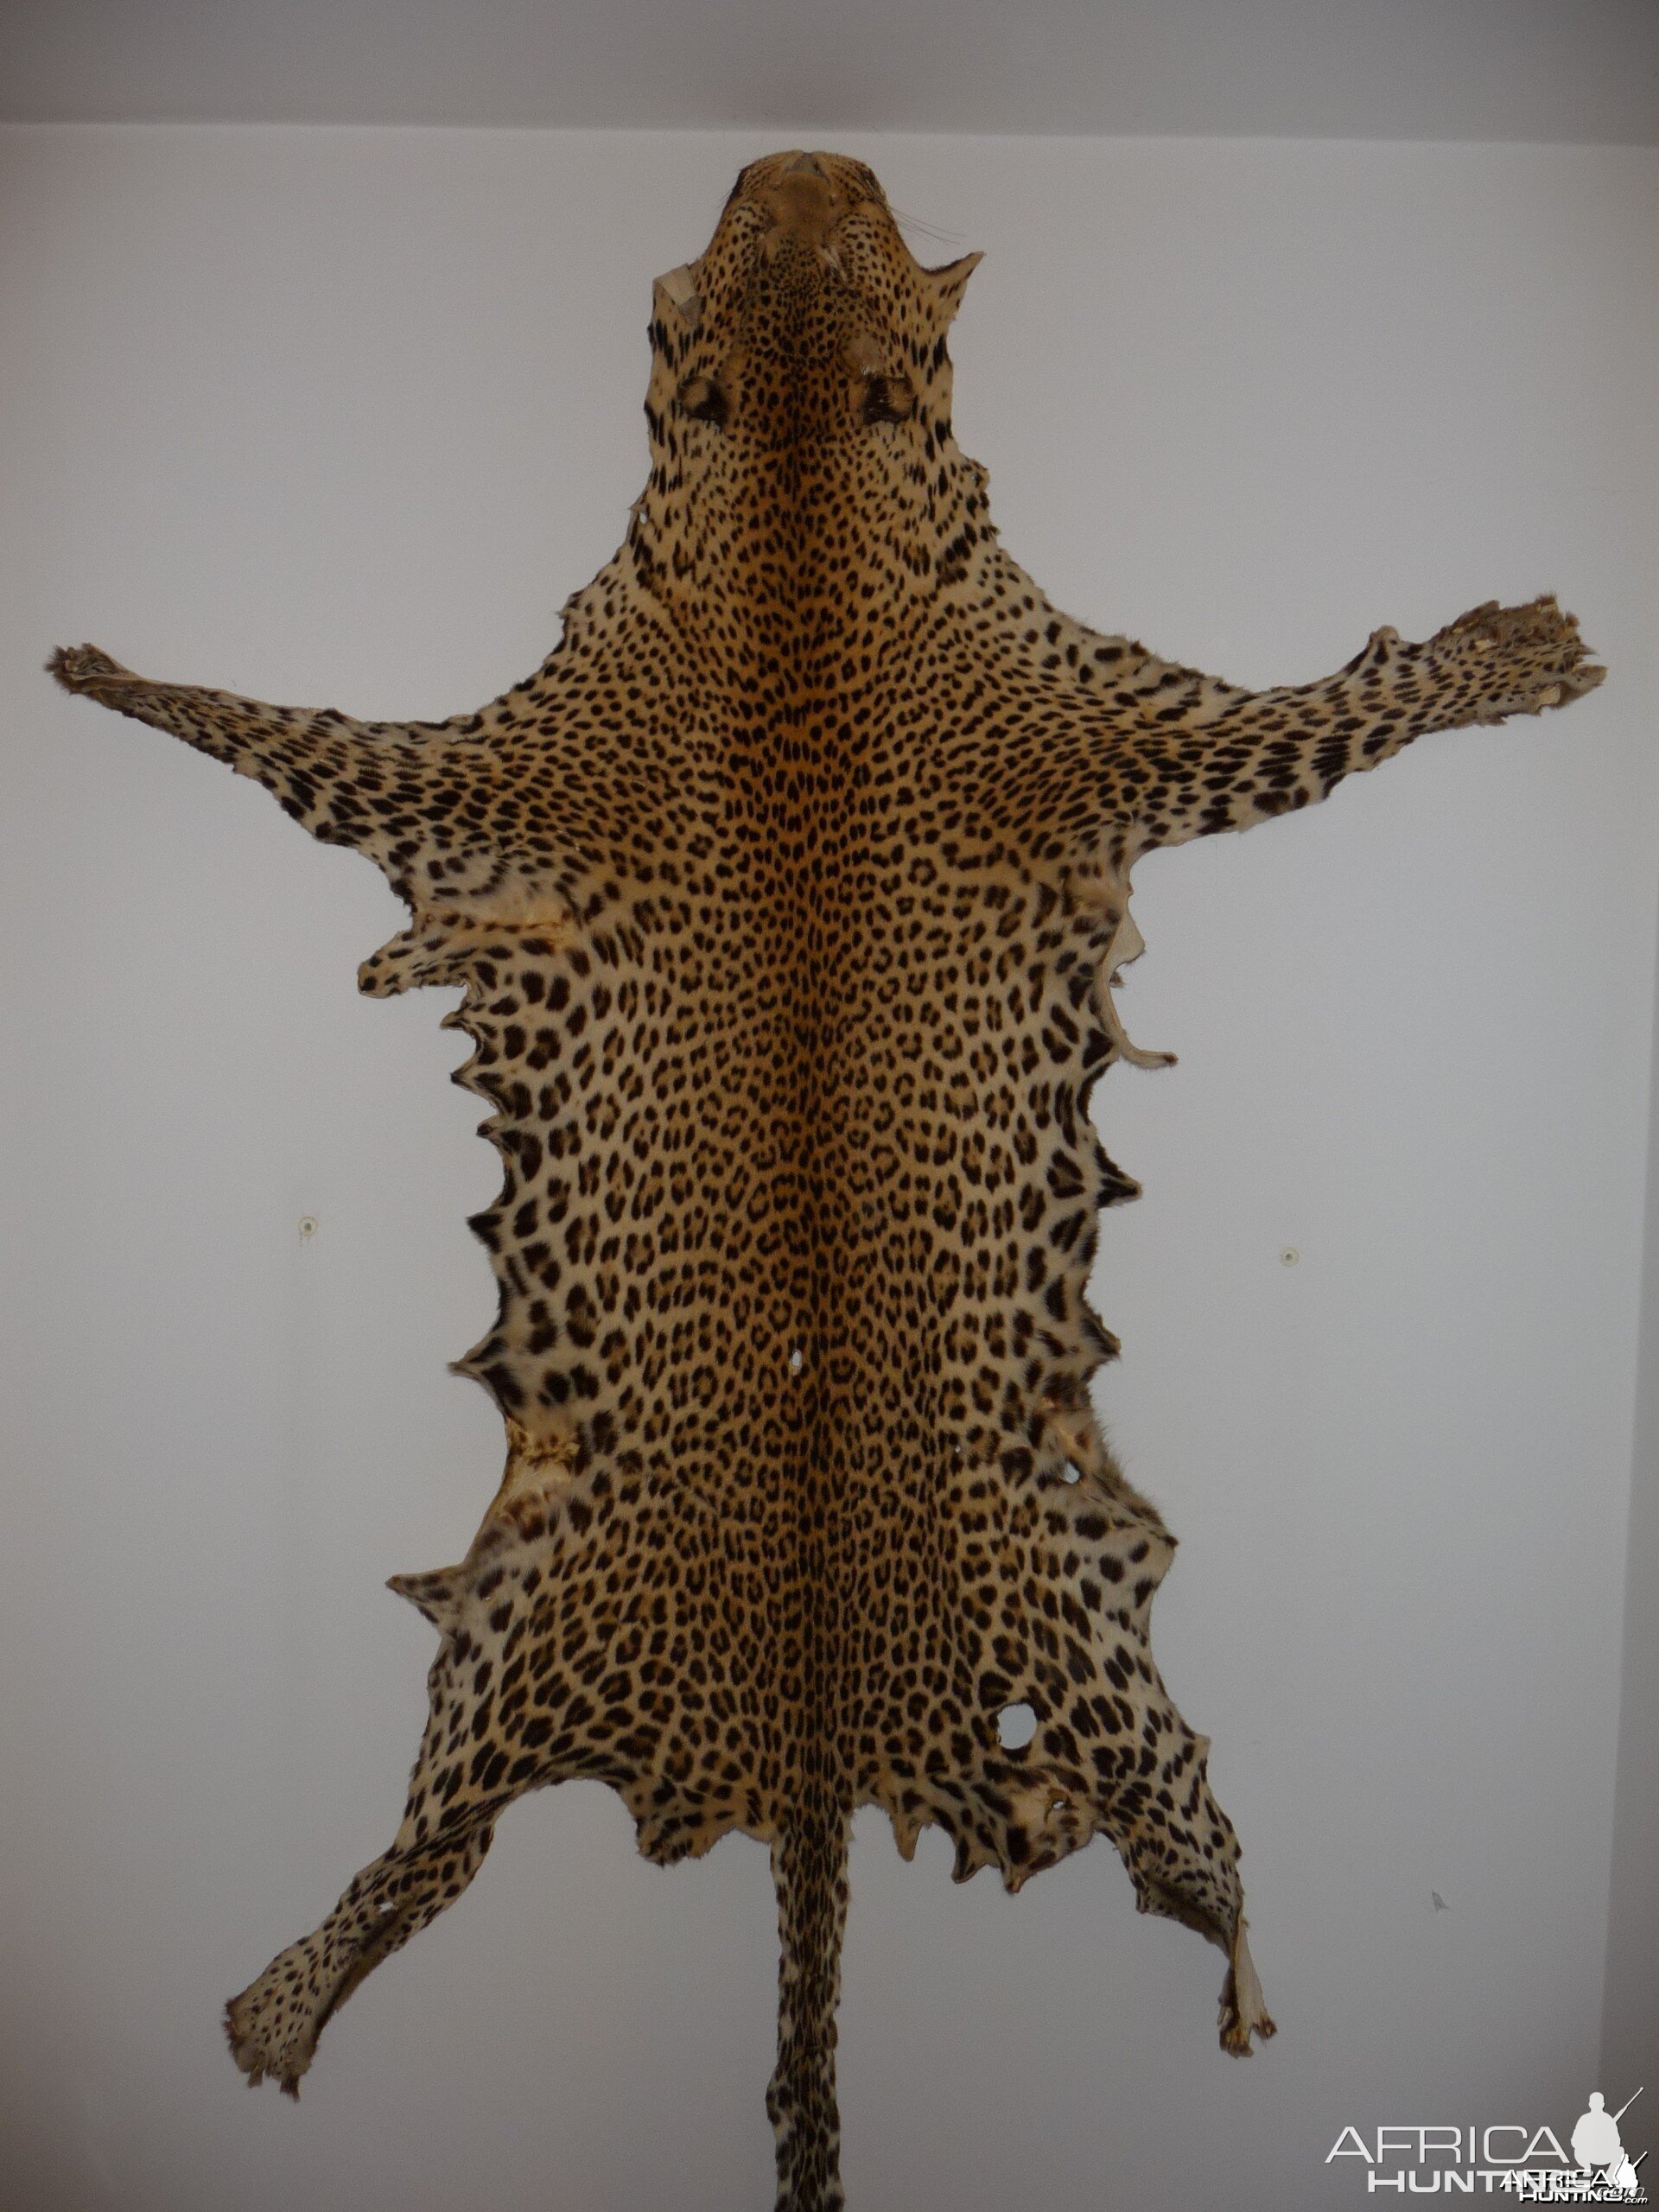 Leopard skin